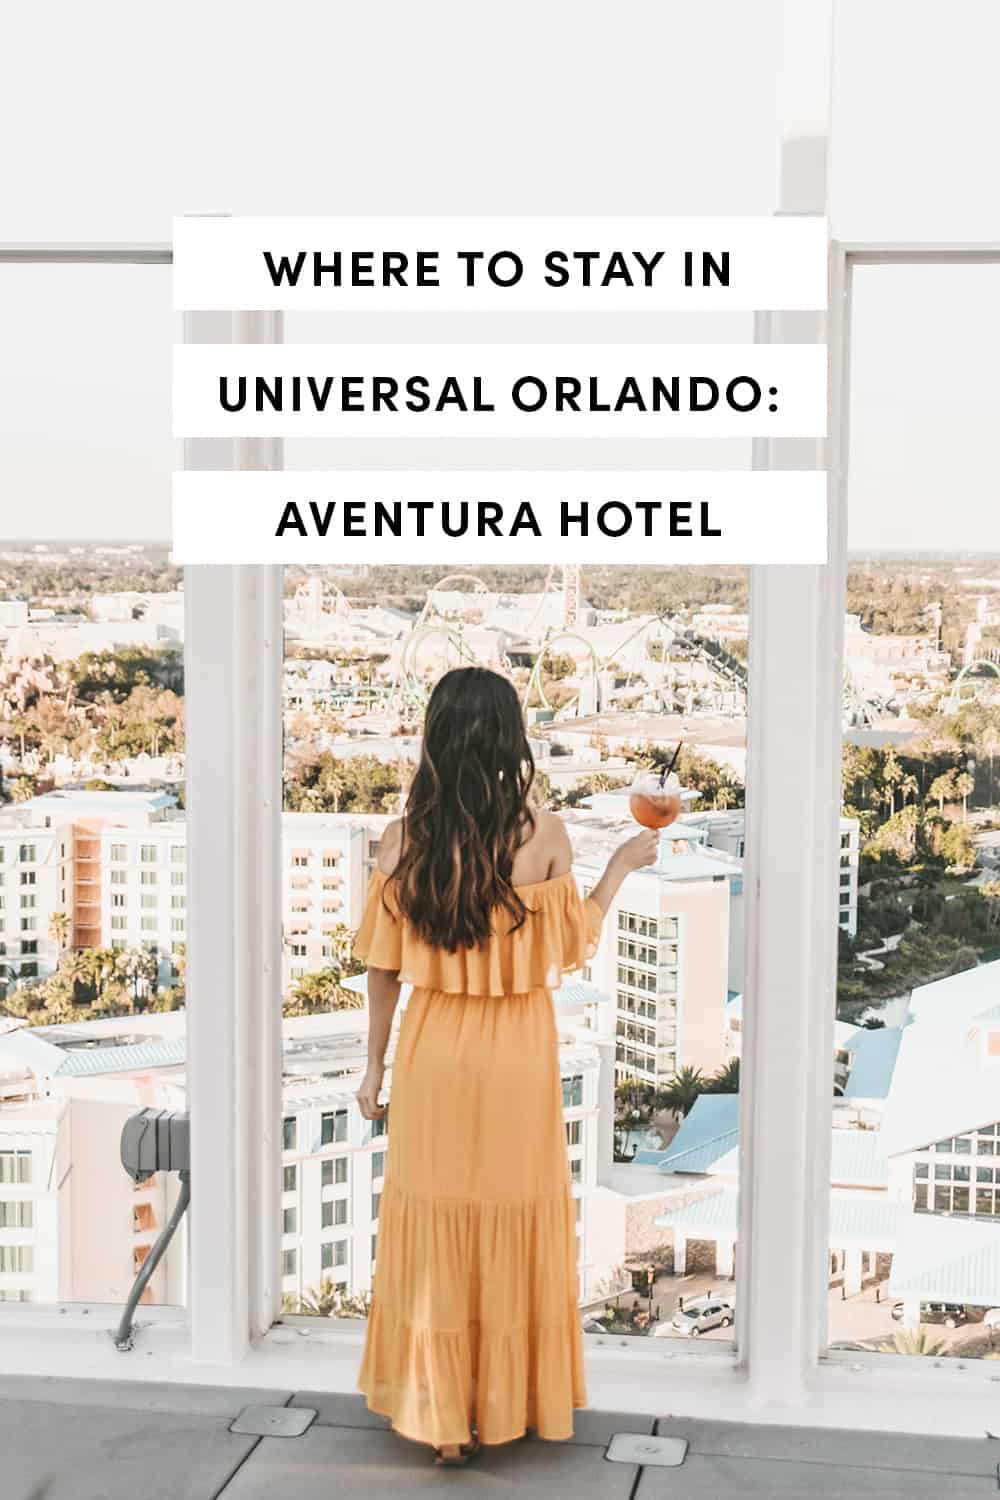 Aventura Hotel at Universal Orlando